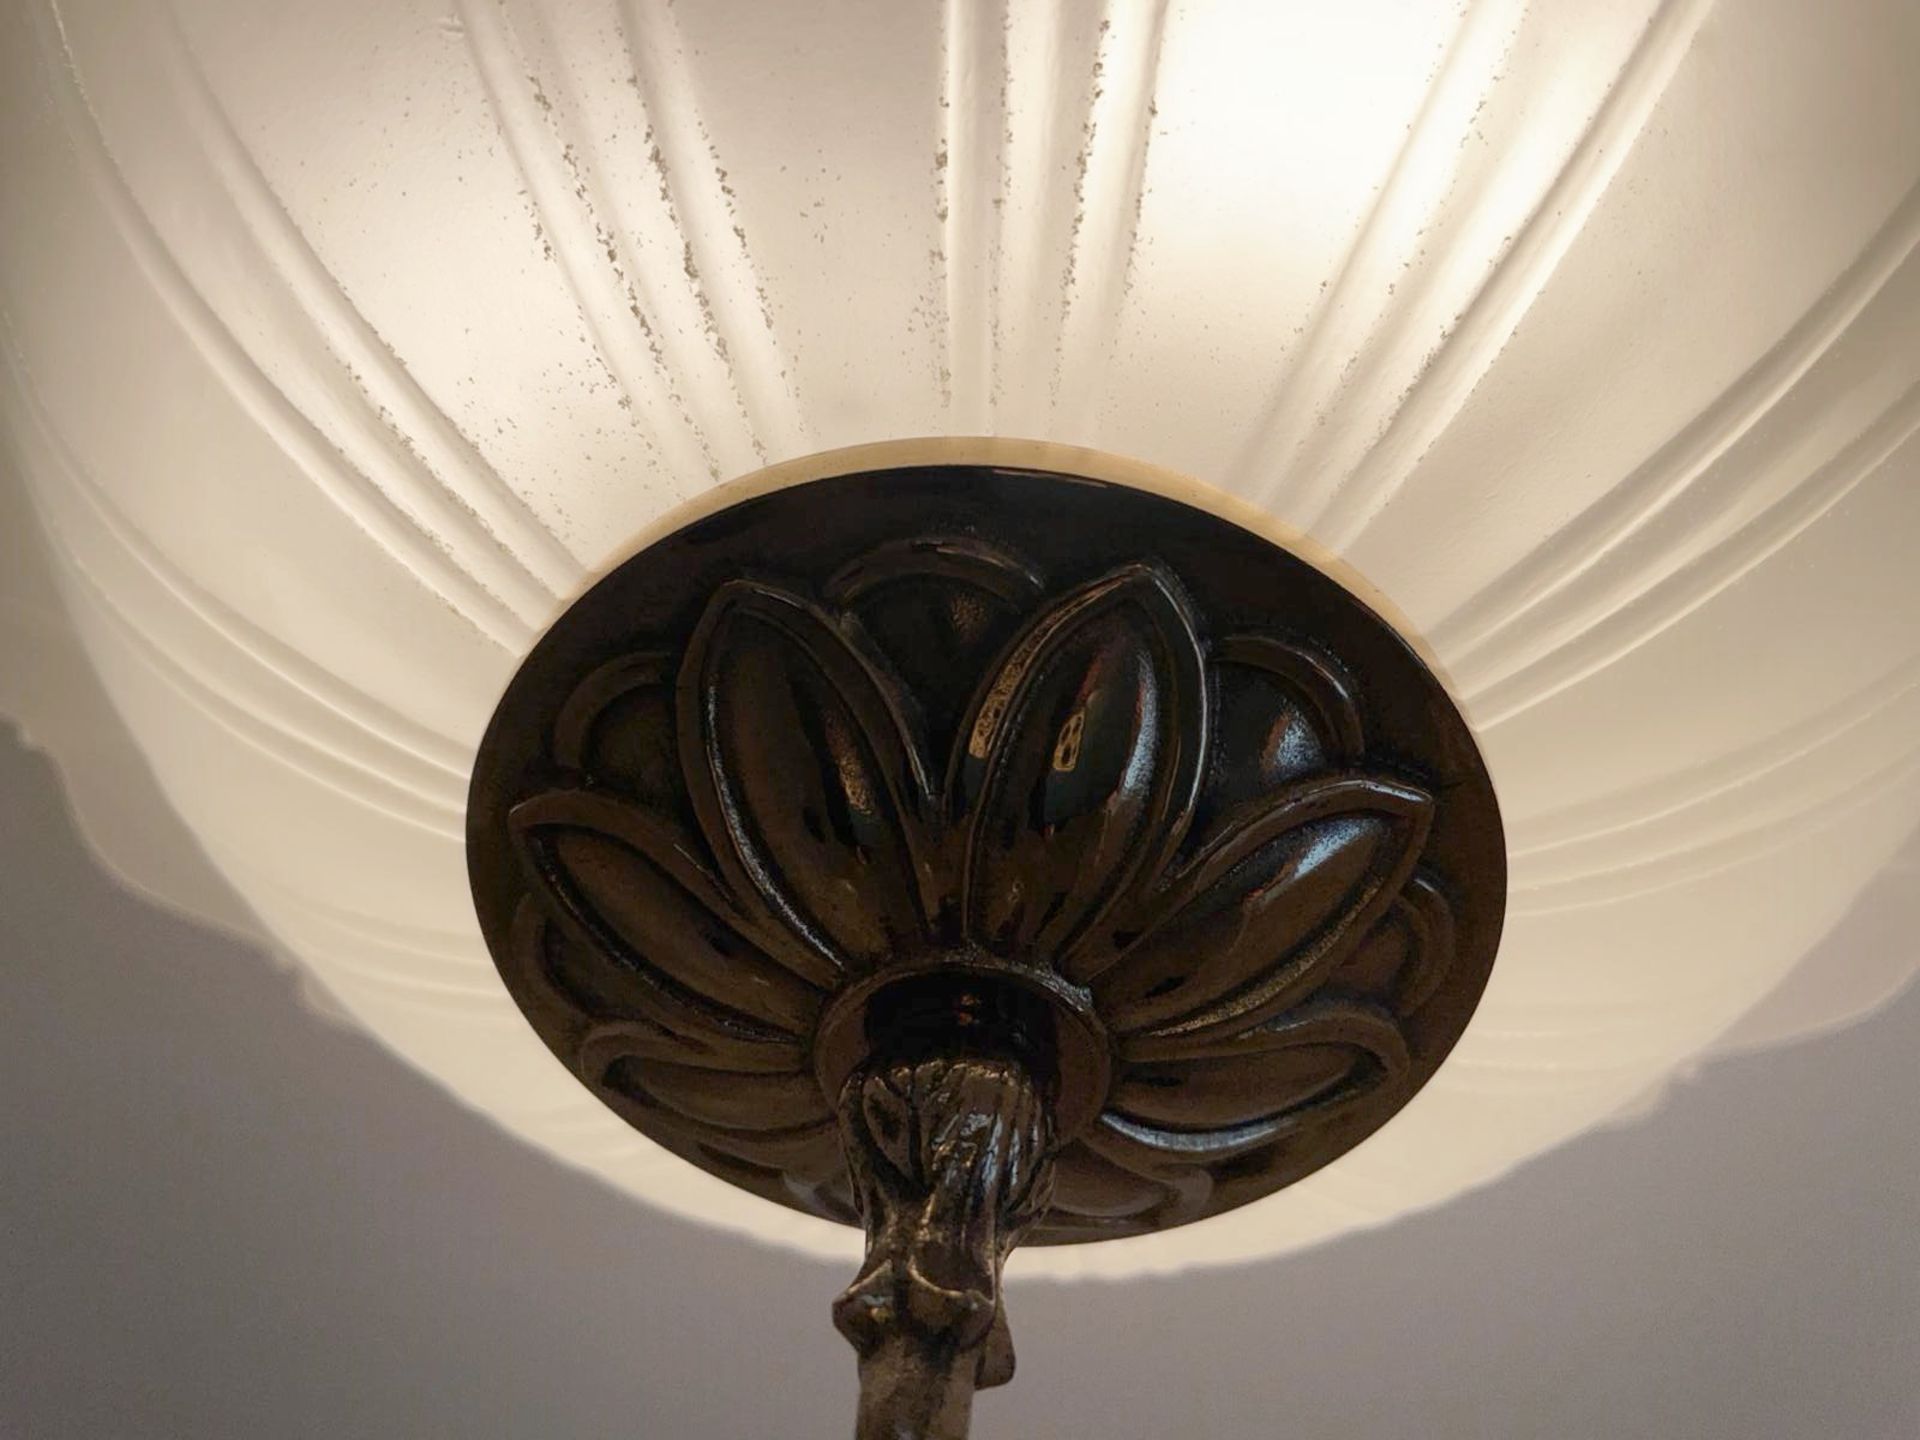 1 x Ornate Glass Ceiling Uplight - Ref: PAN142 / SIDE-DR - CL896 - NO VAT ON THE HAMMER - - Image 5 of 7